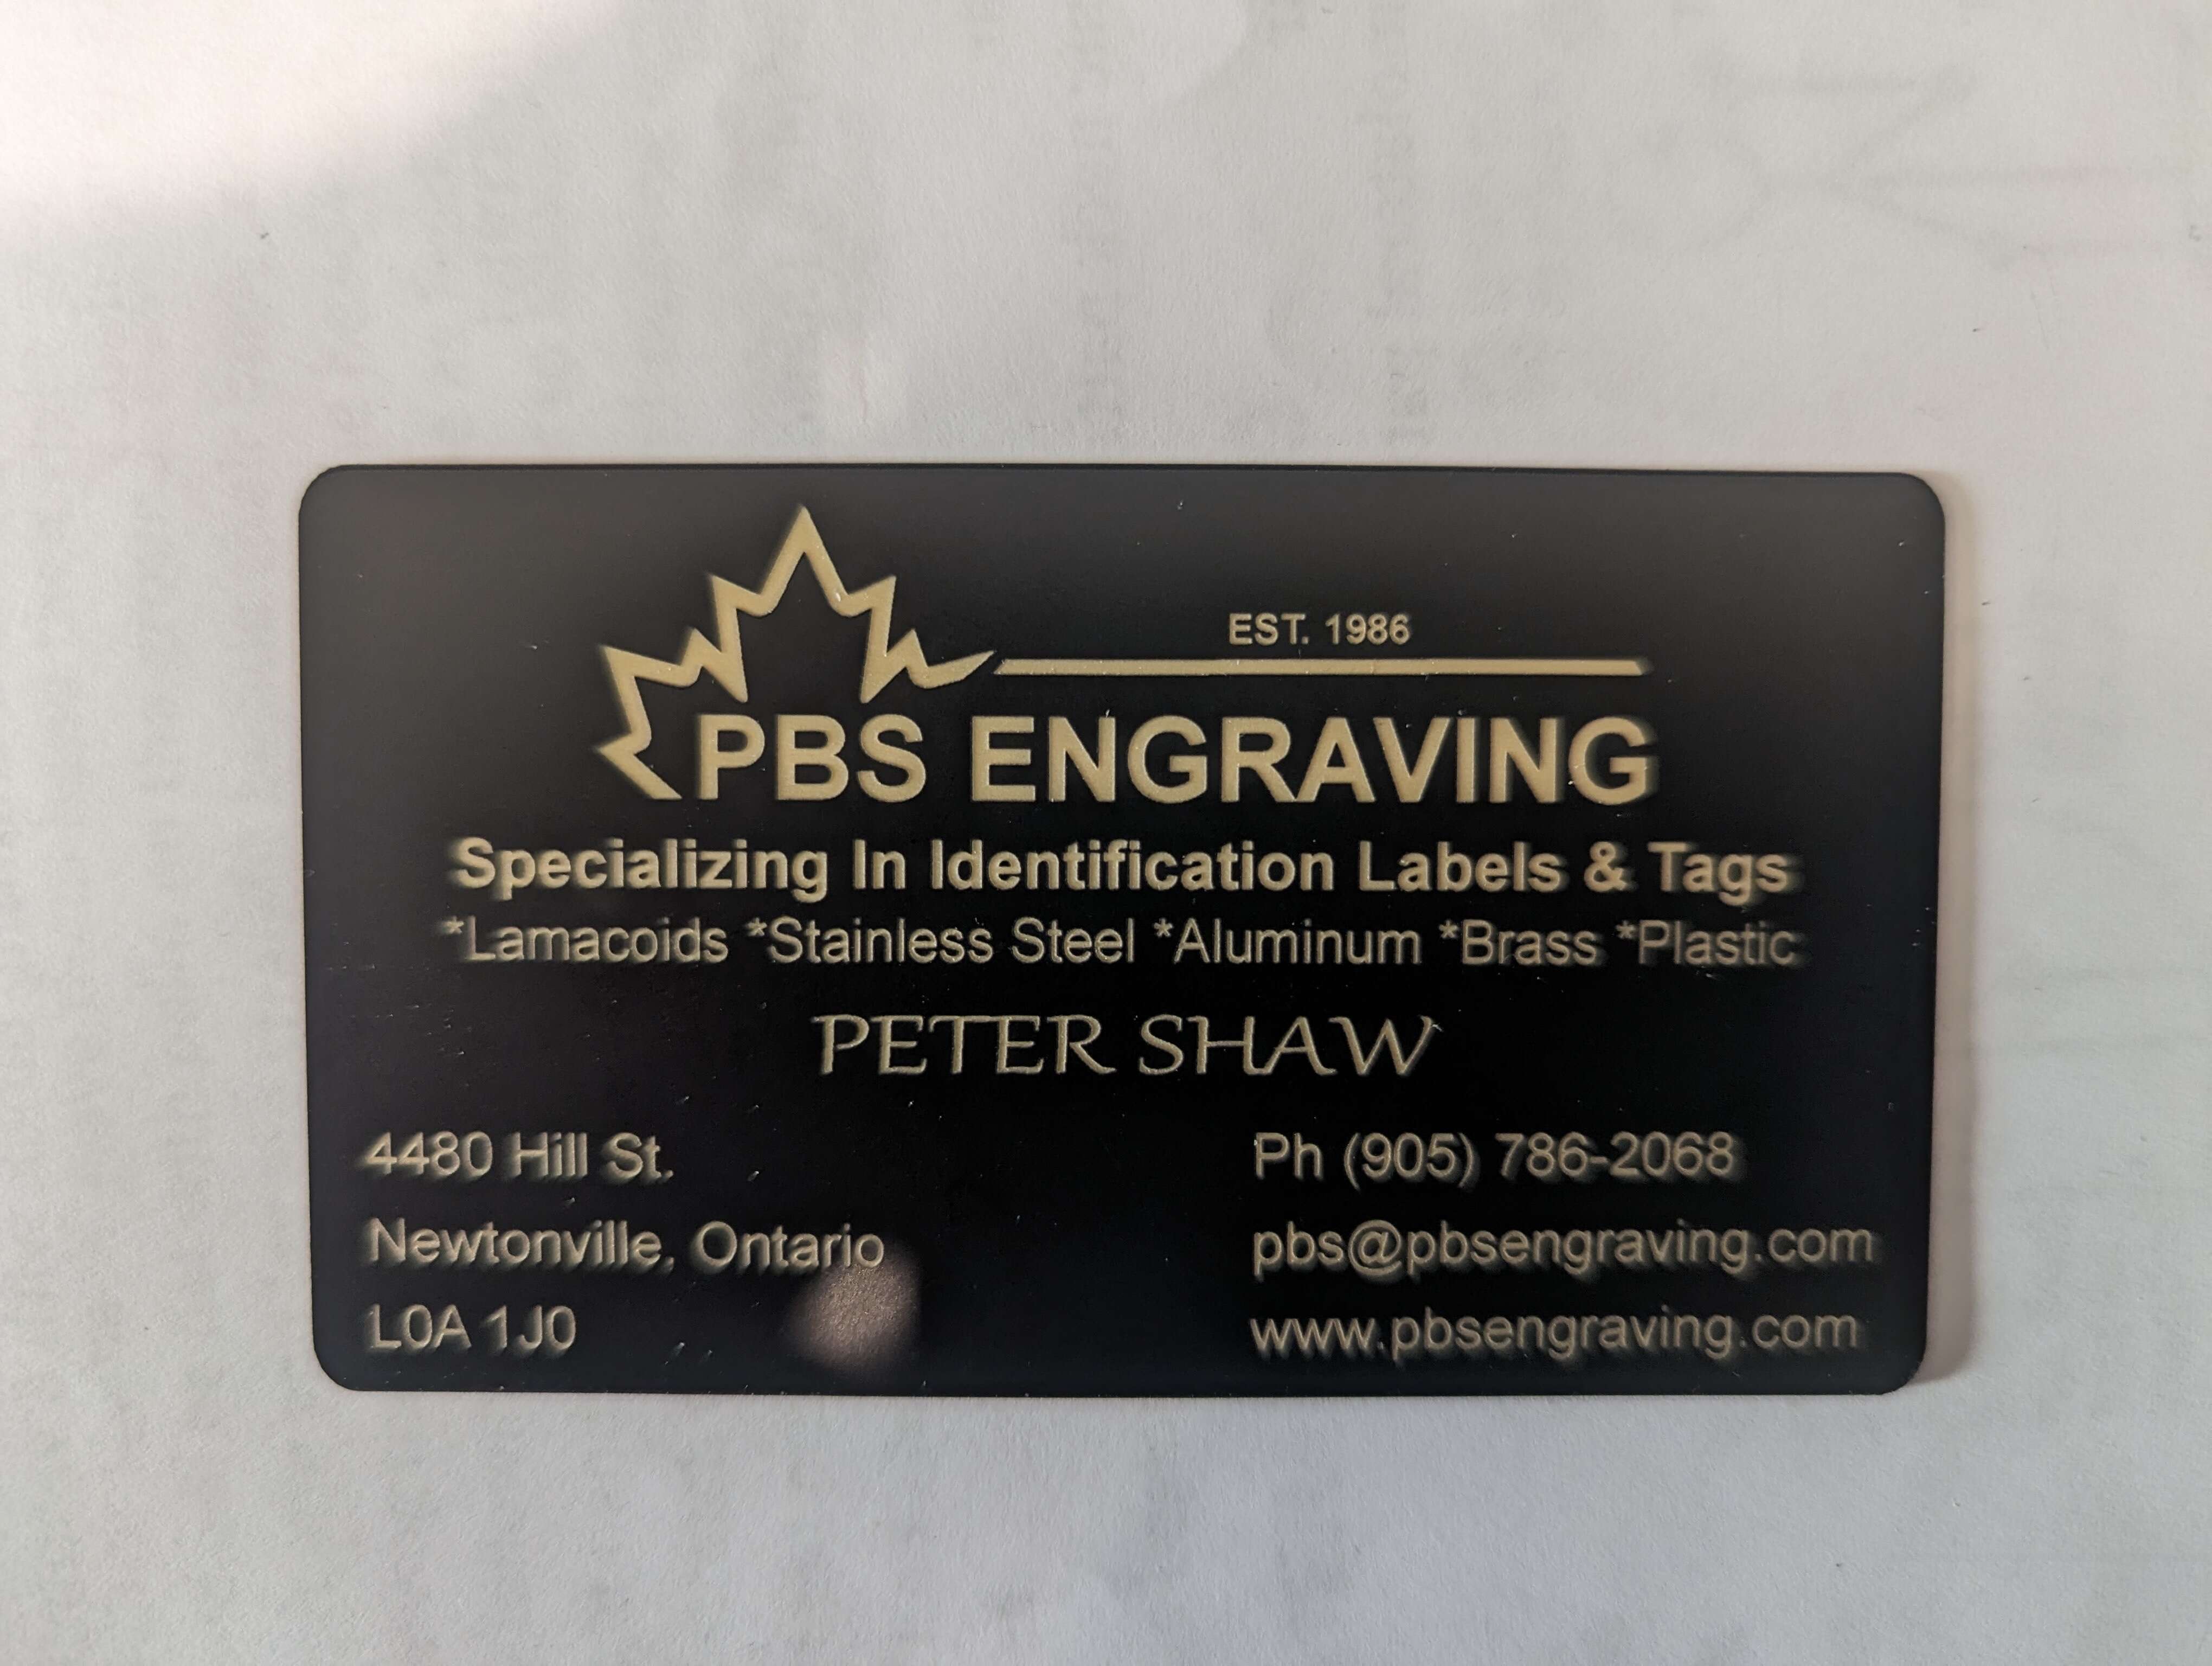 PBS Engraving